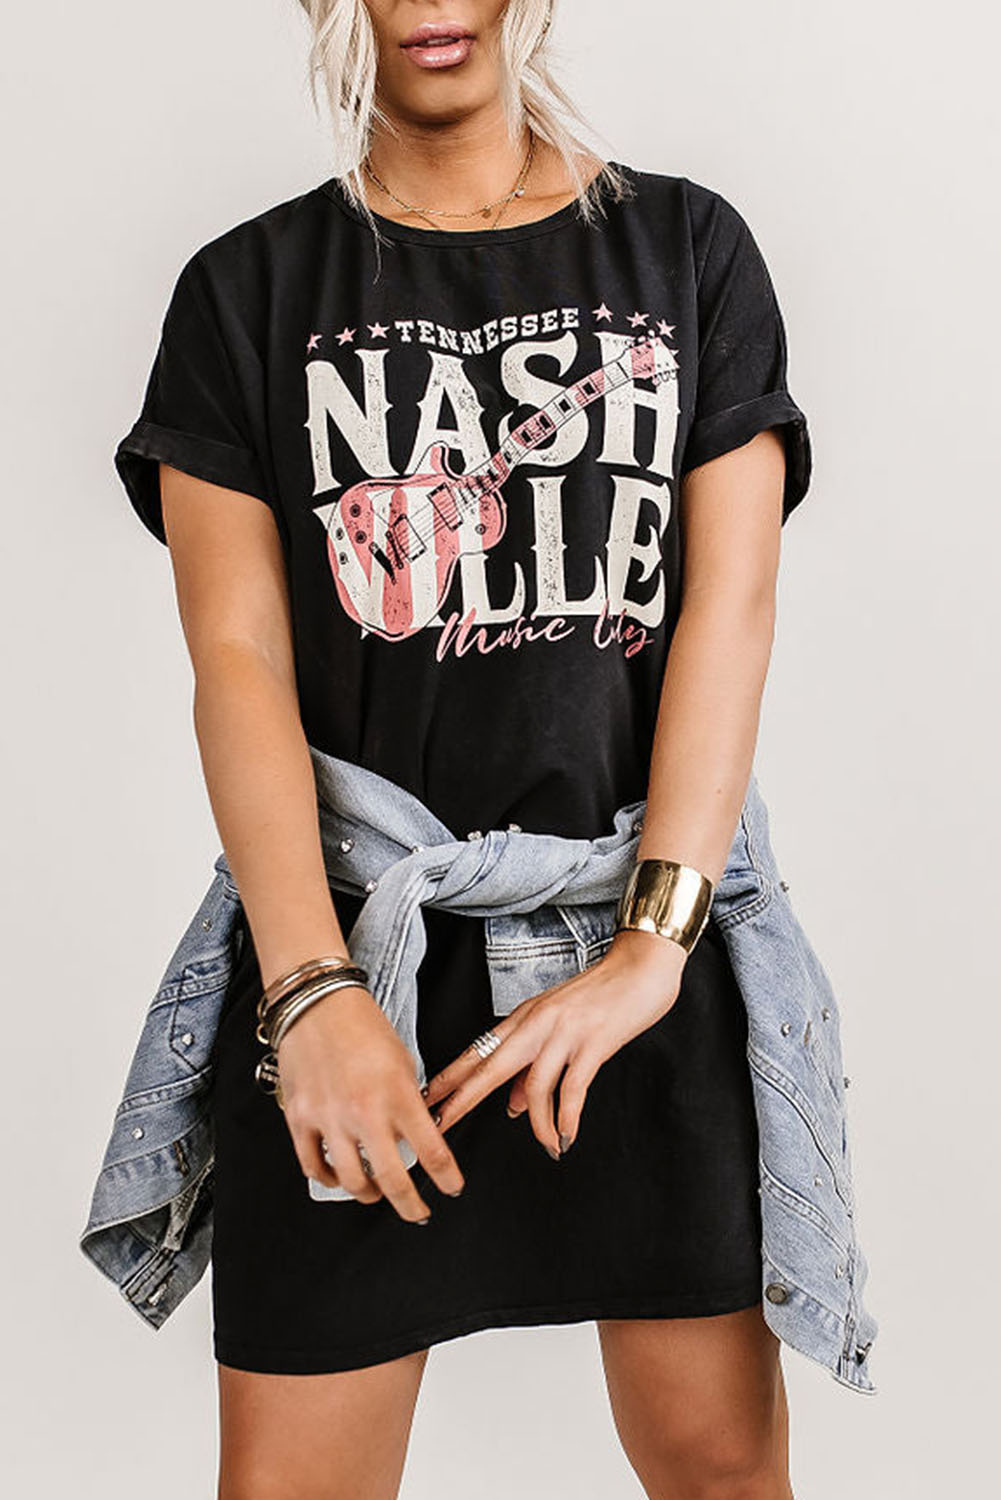 Shewin Wholesale High Quality Black Nashville MUSIC Festival Trending T-Shirt Dress